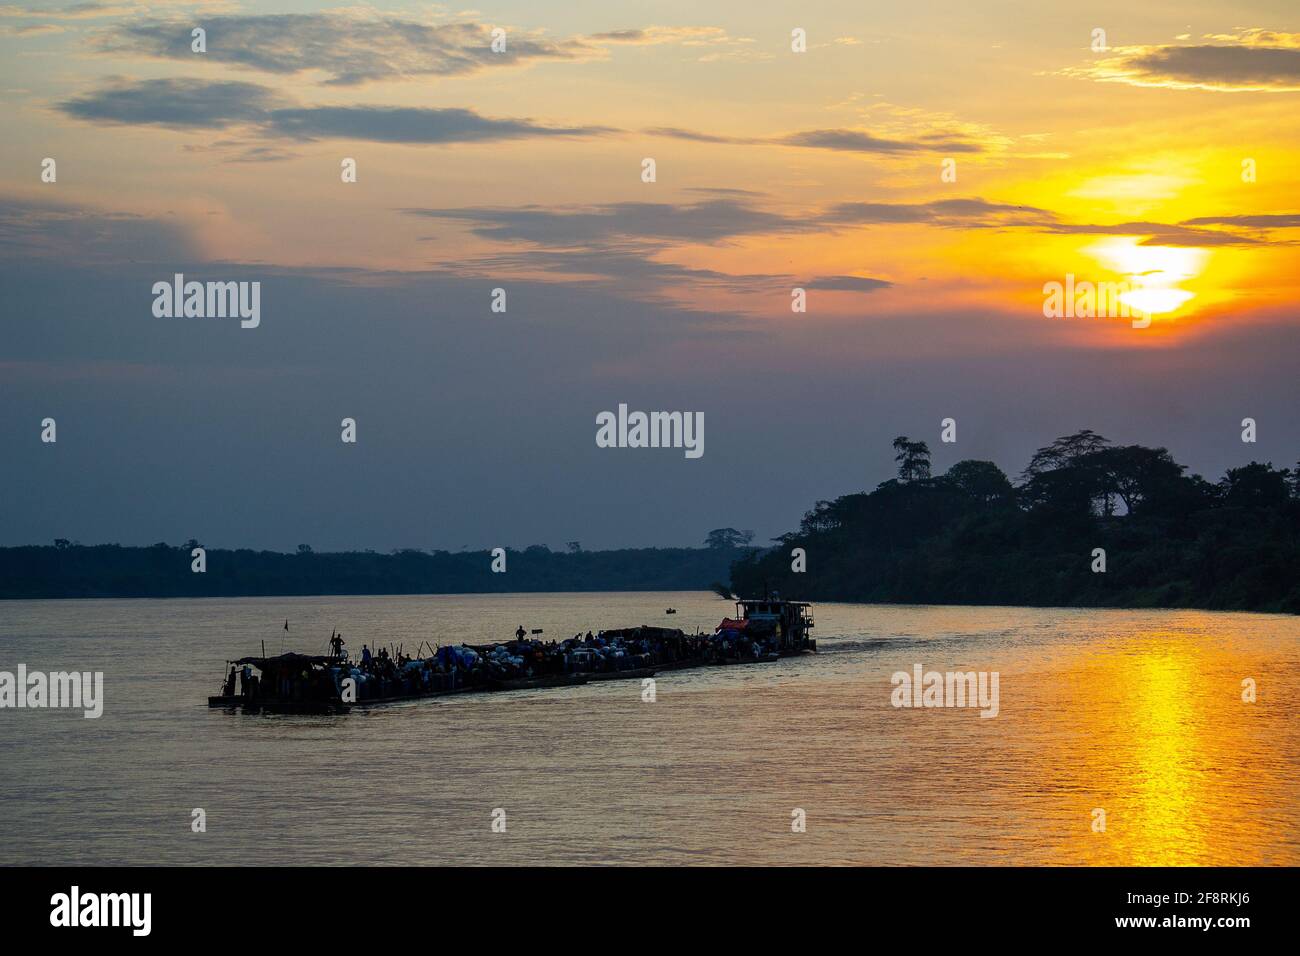 Barge, die bei Sonnenuntergang Kisangani ablegt und den Kongo entlang nach Kinshasa fährt. Demokratische Republik Kongo, Zentralafrika. Stockfoto